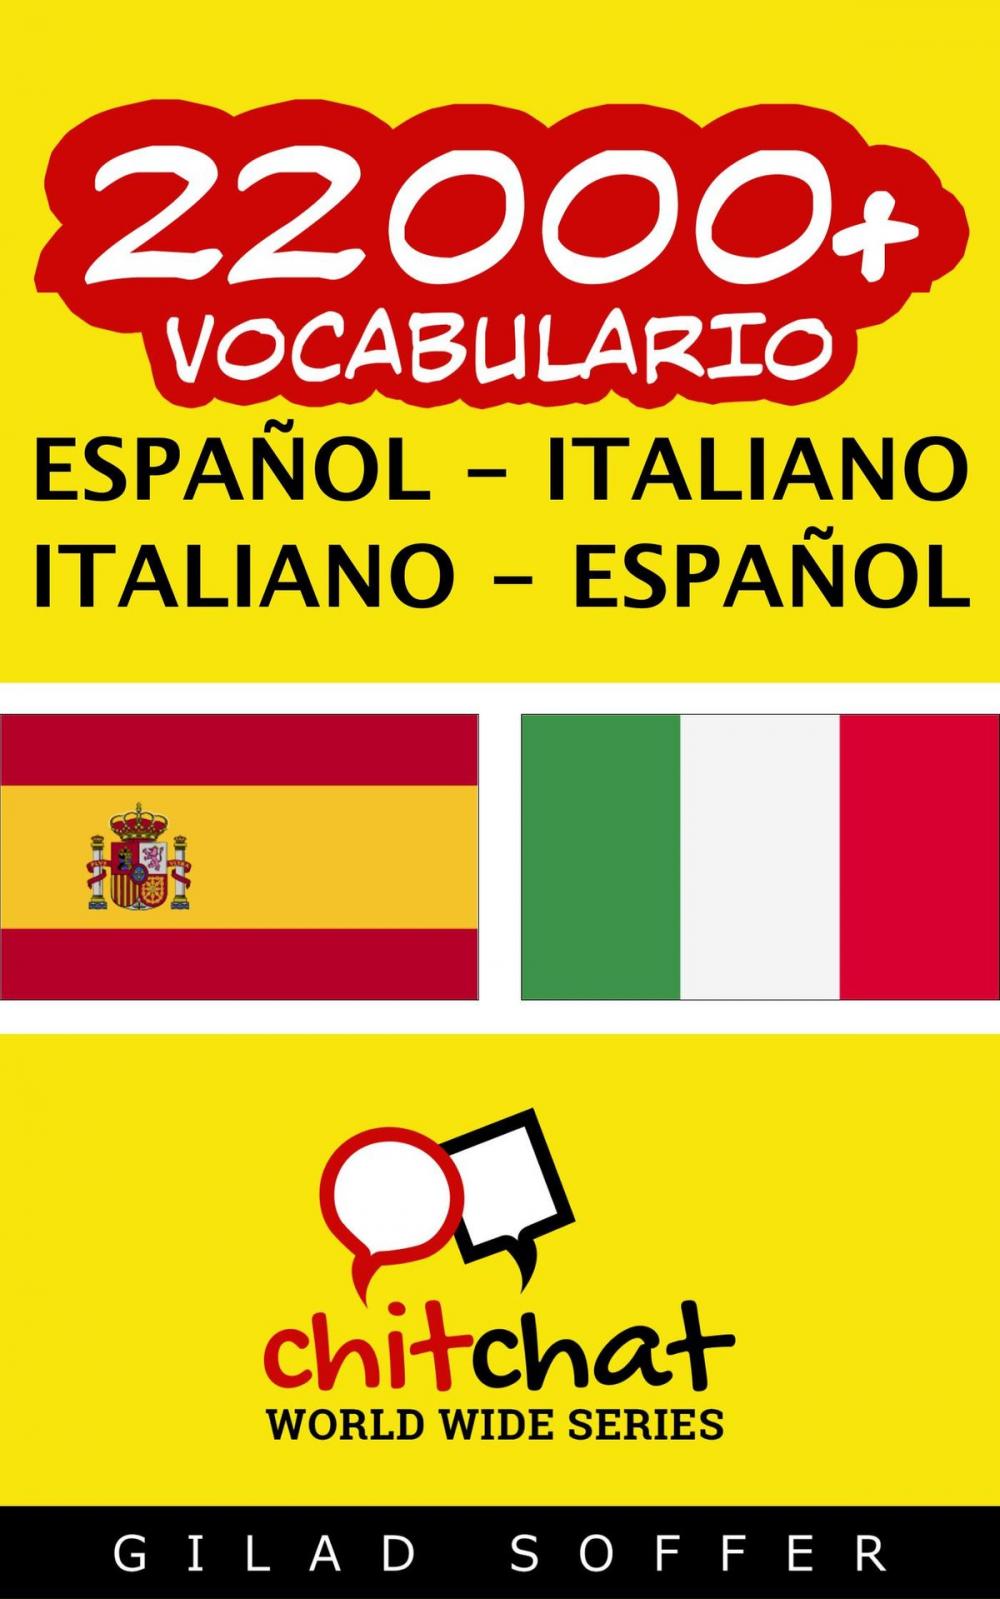 Big bigCover of 22000+ vocabulario español - italiano